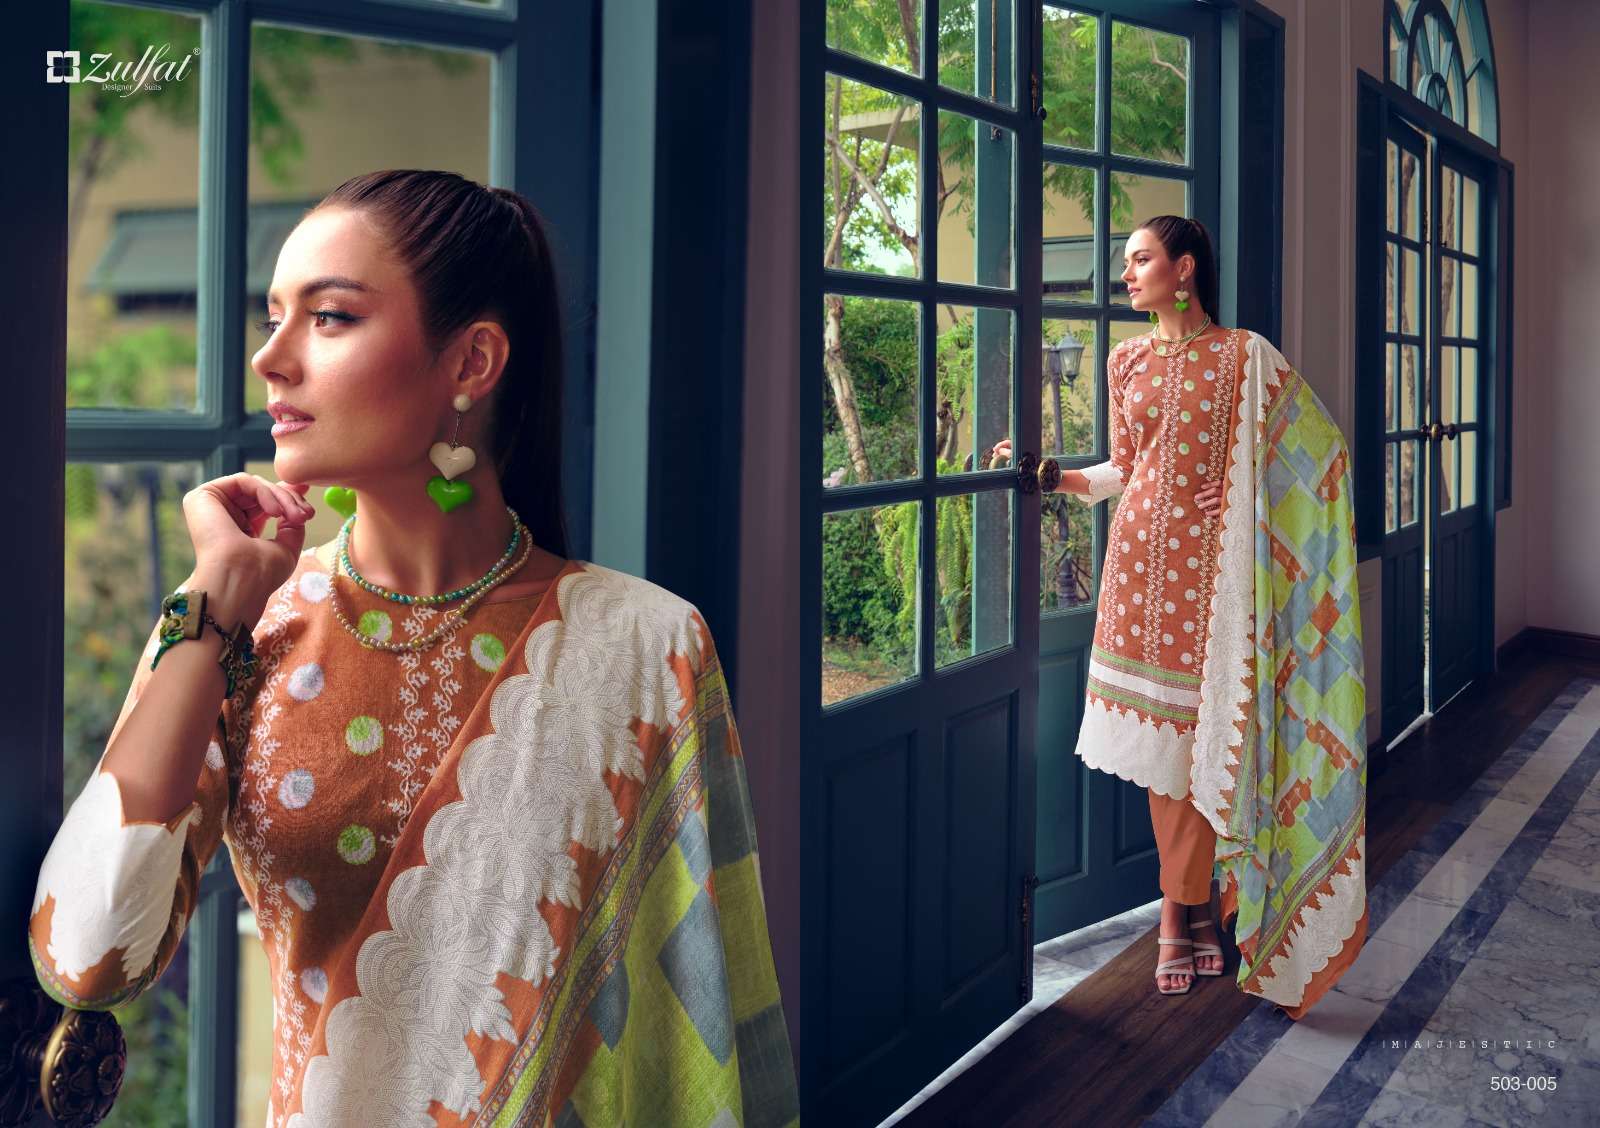 zulfat designer suits nasreen pure cotton designer salwar suits catalogue supplier surat